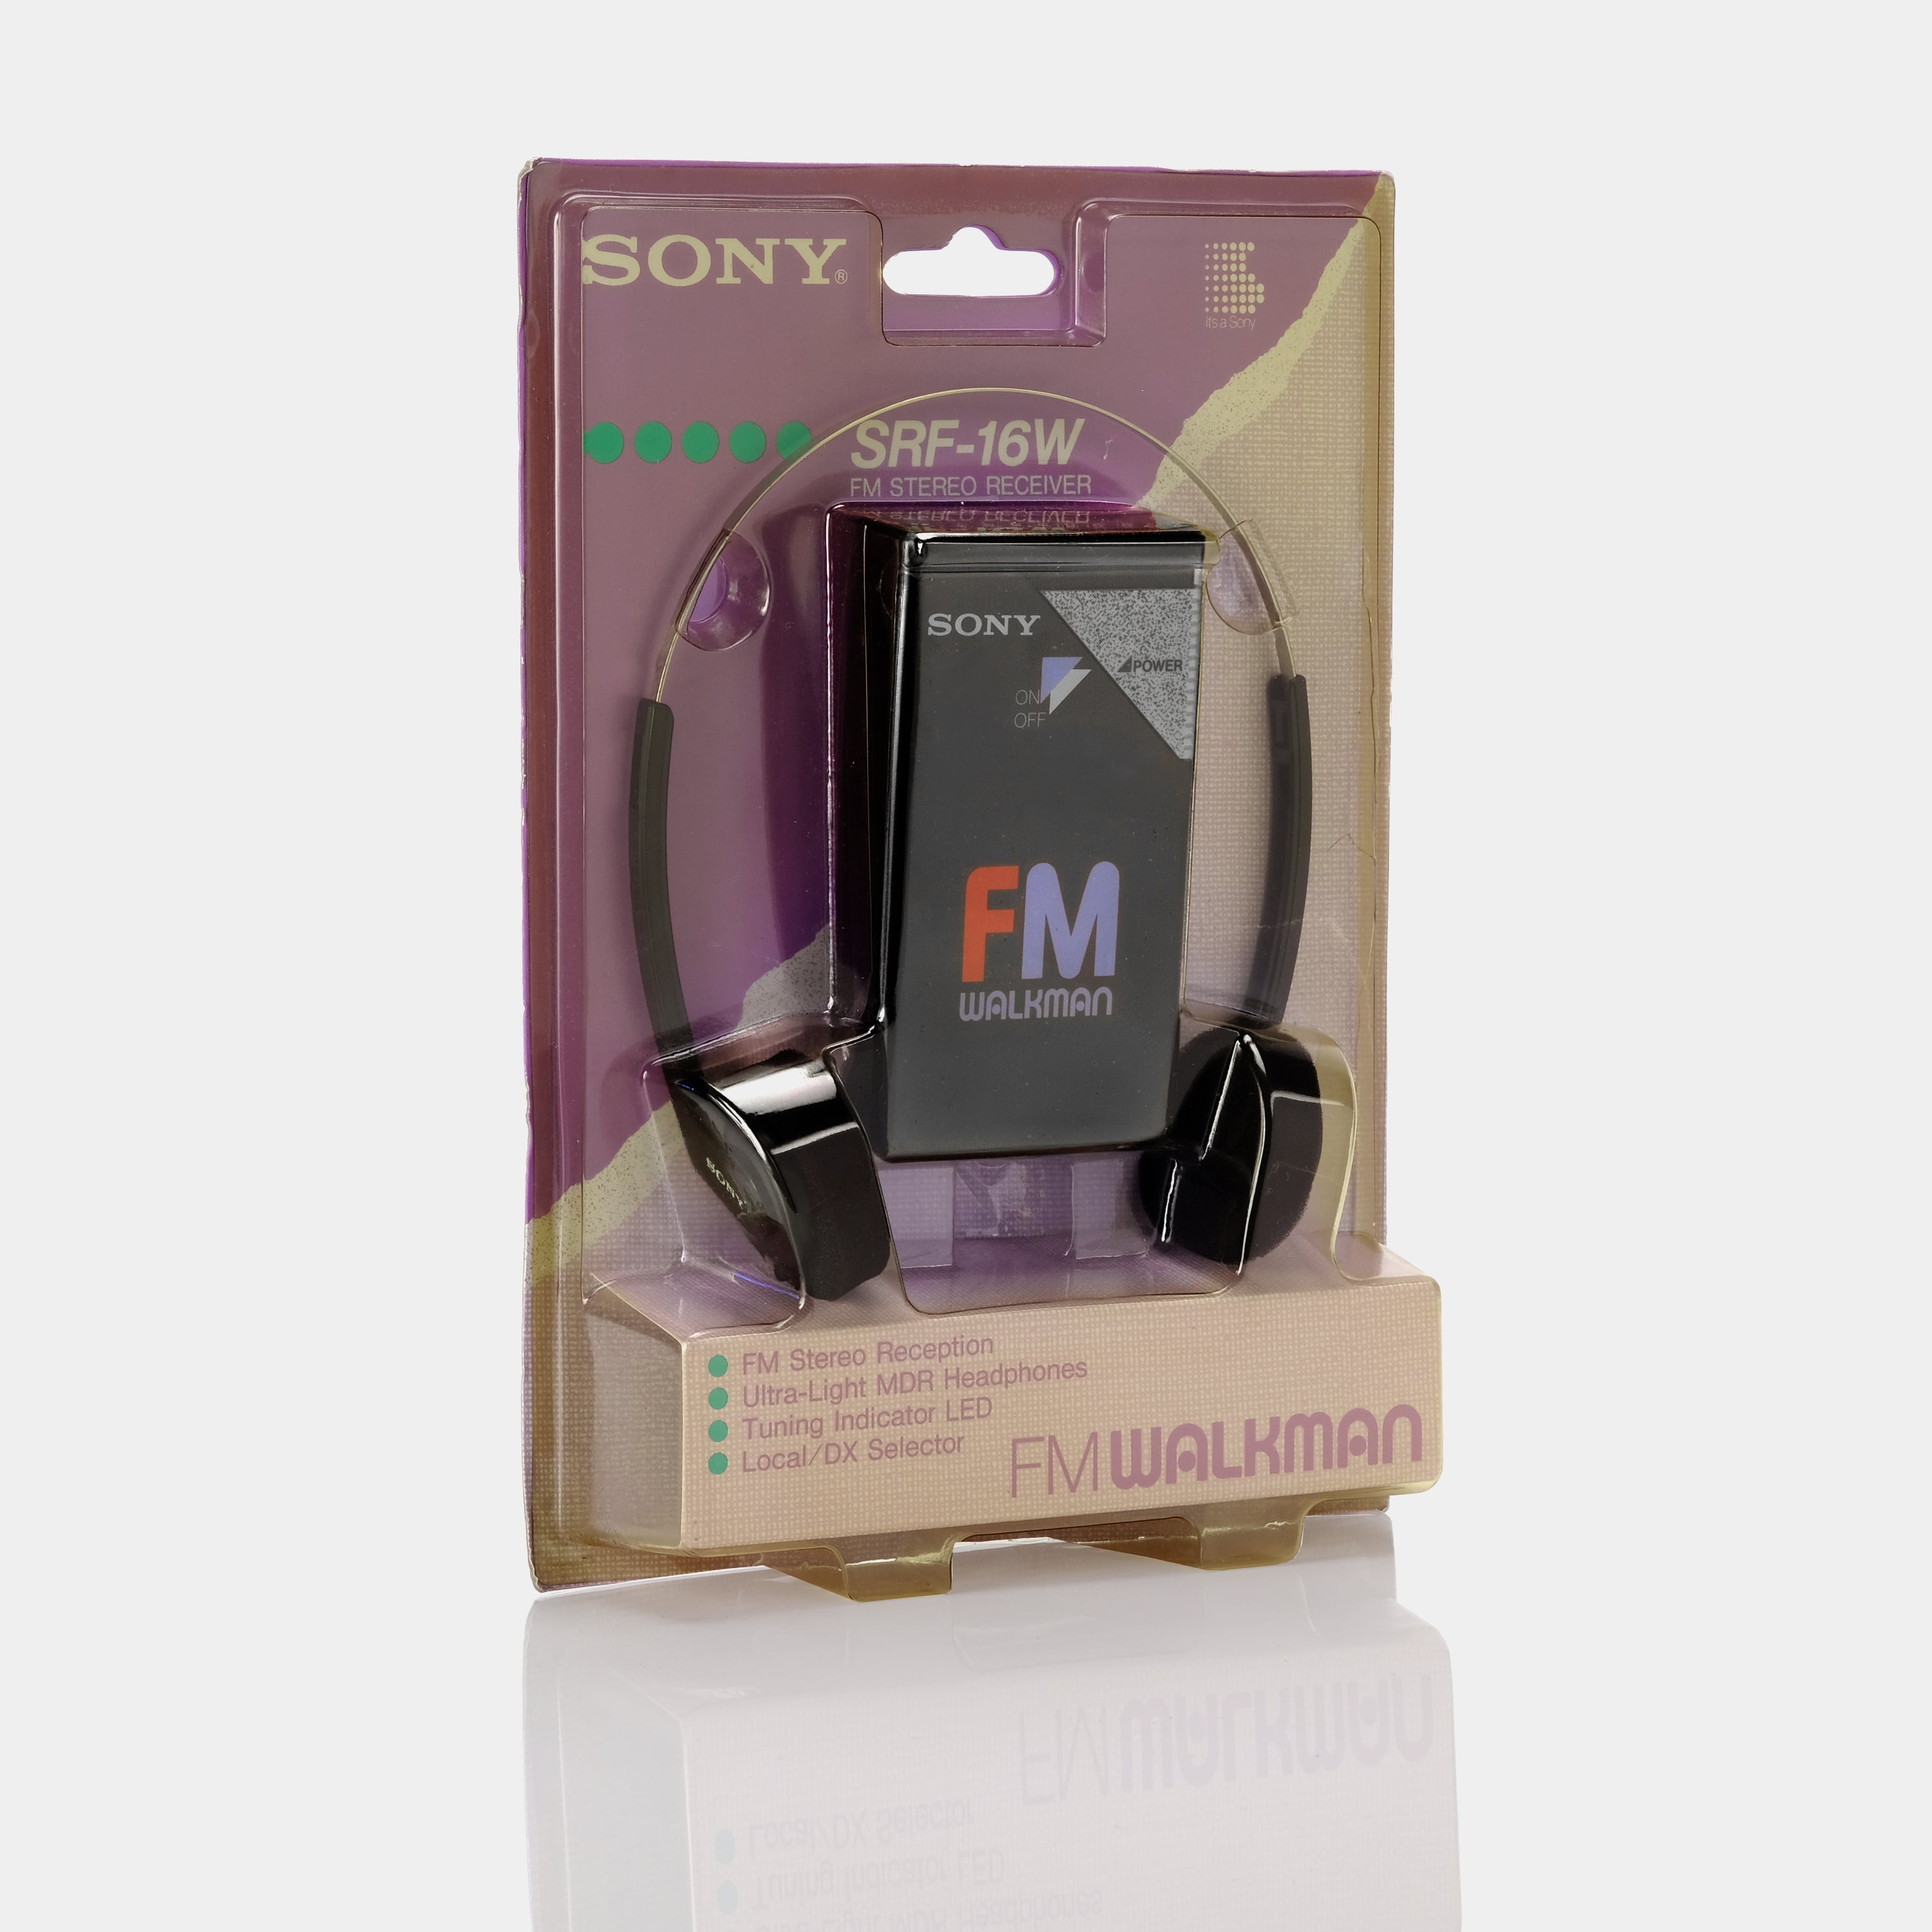 Sony Walkman SRF-15W FM Portable Radio (New Old Stock)